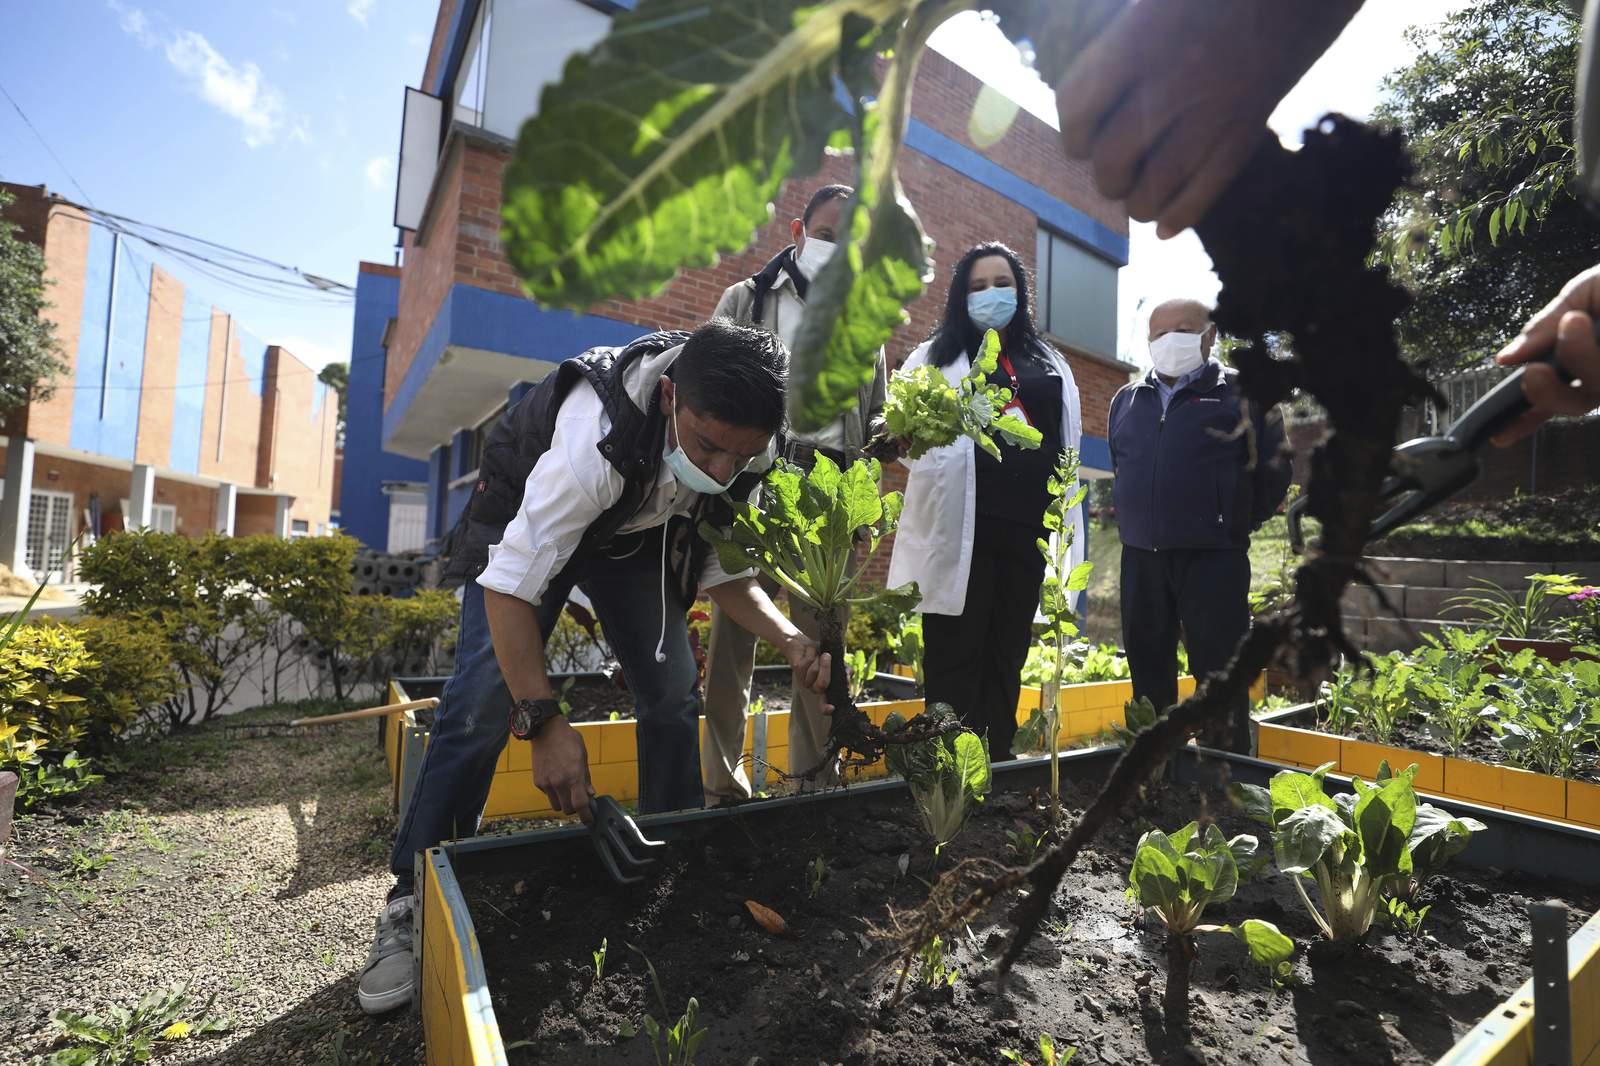 Gardening helps kidney patients in Colombian hospital